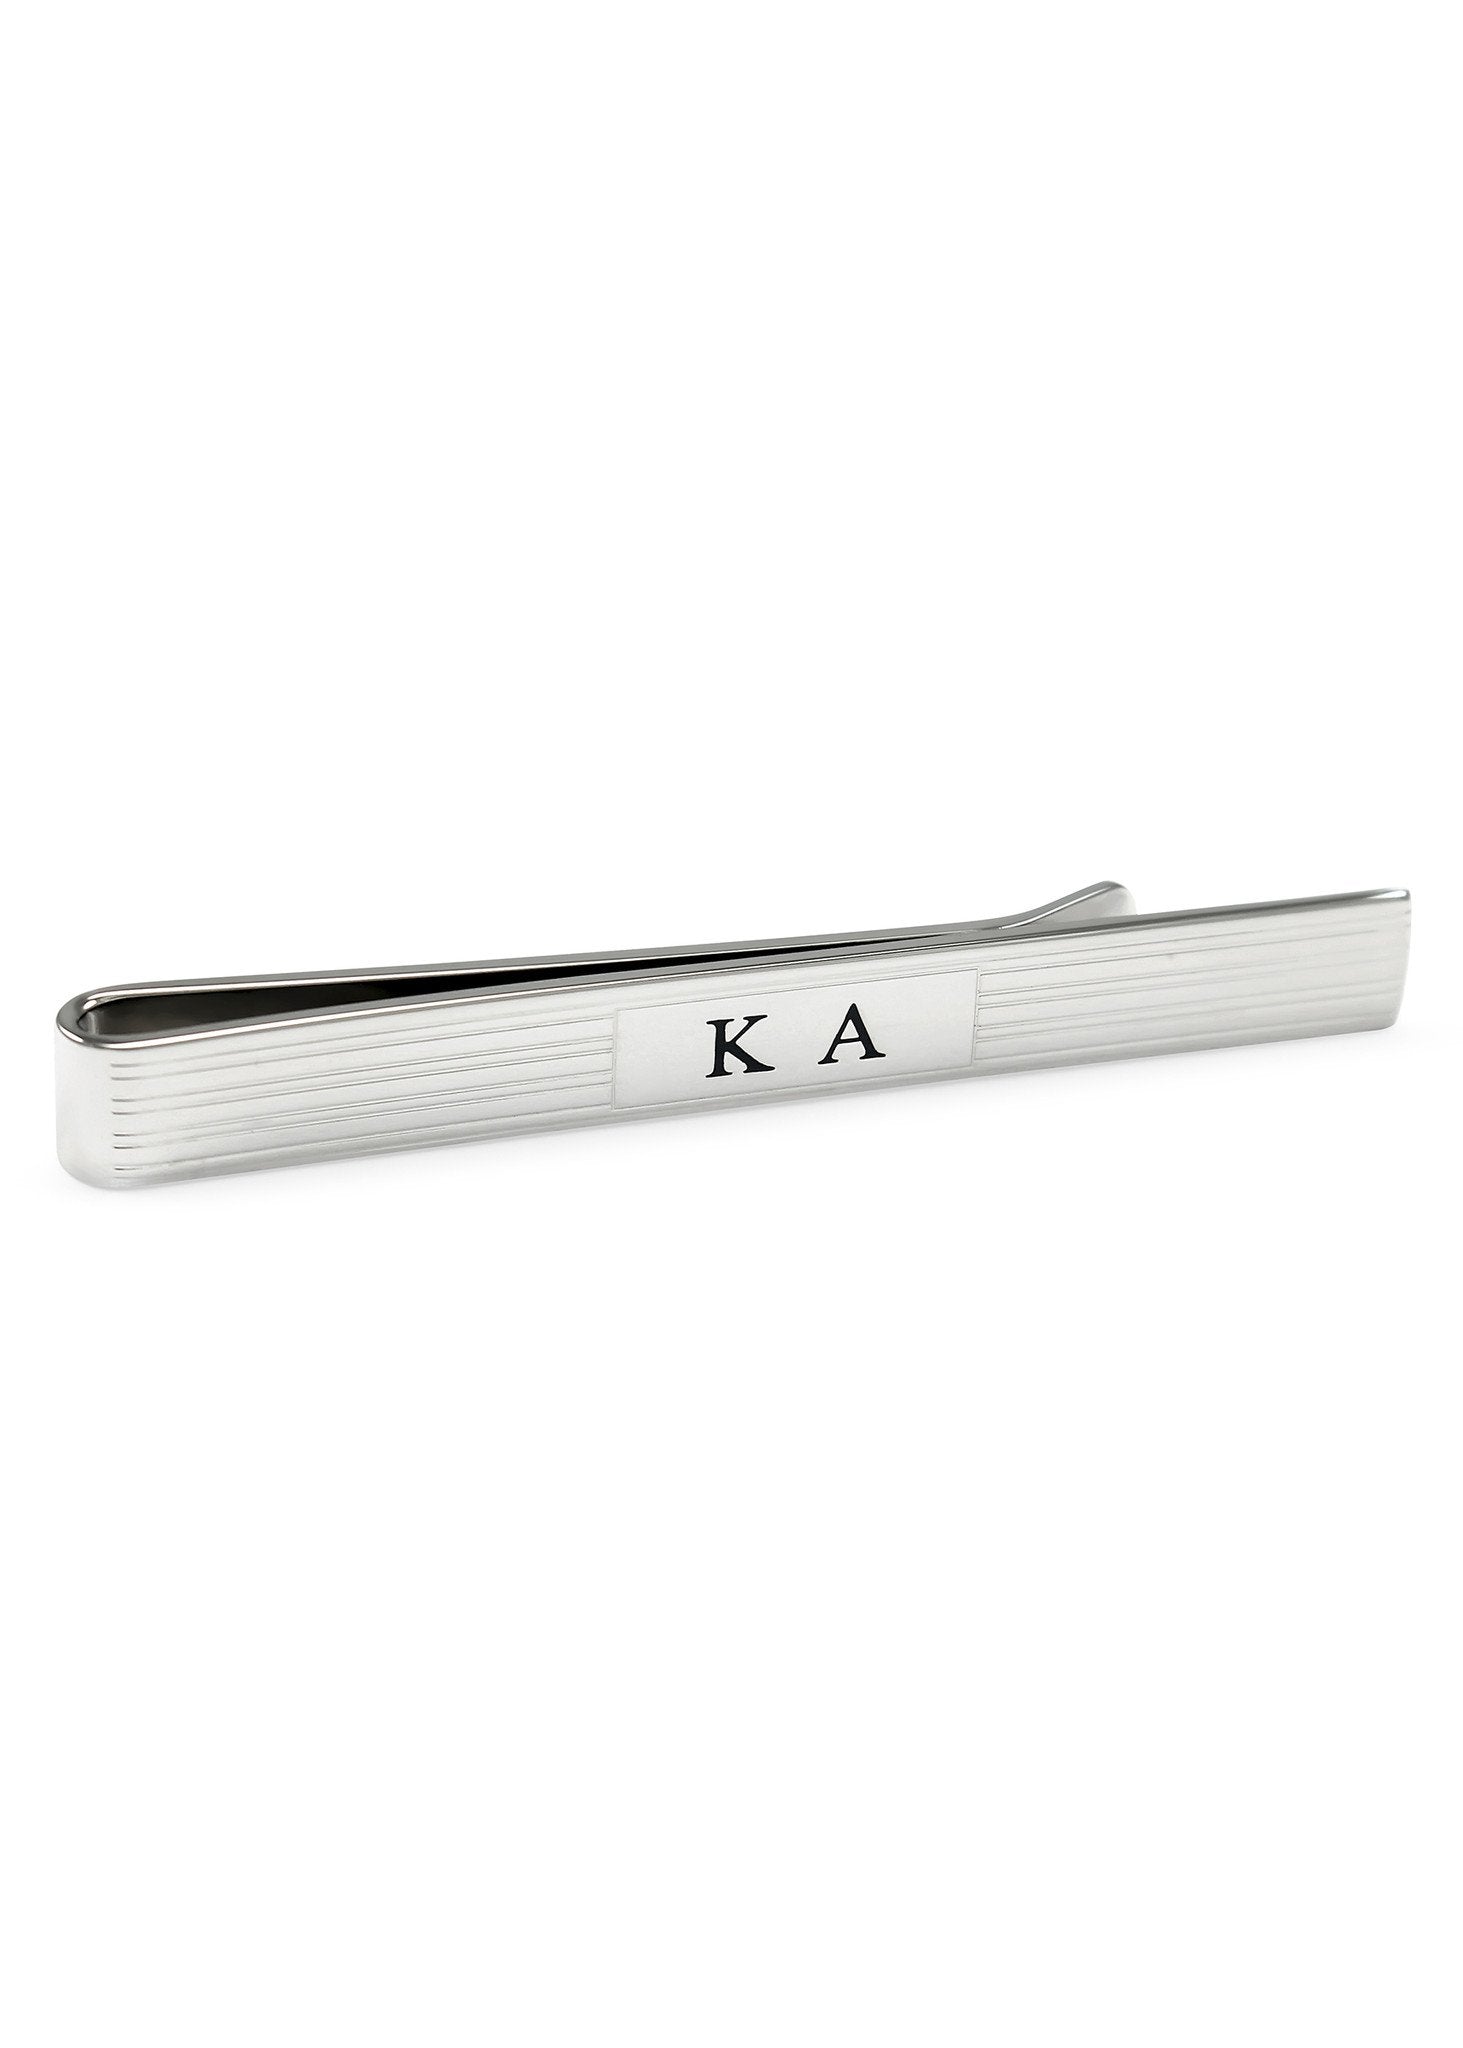 oase letvægt Snazzy Kappa Alpha Order Tie Clip Bar | KA Fraternity - The Collegiate Standard